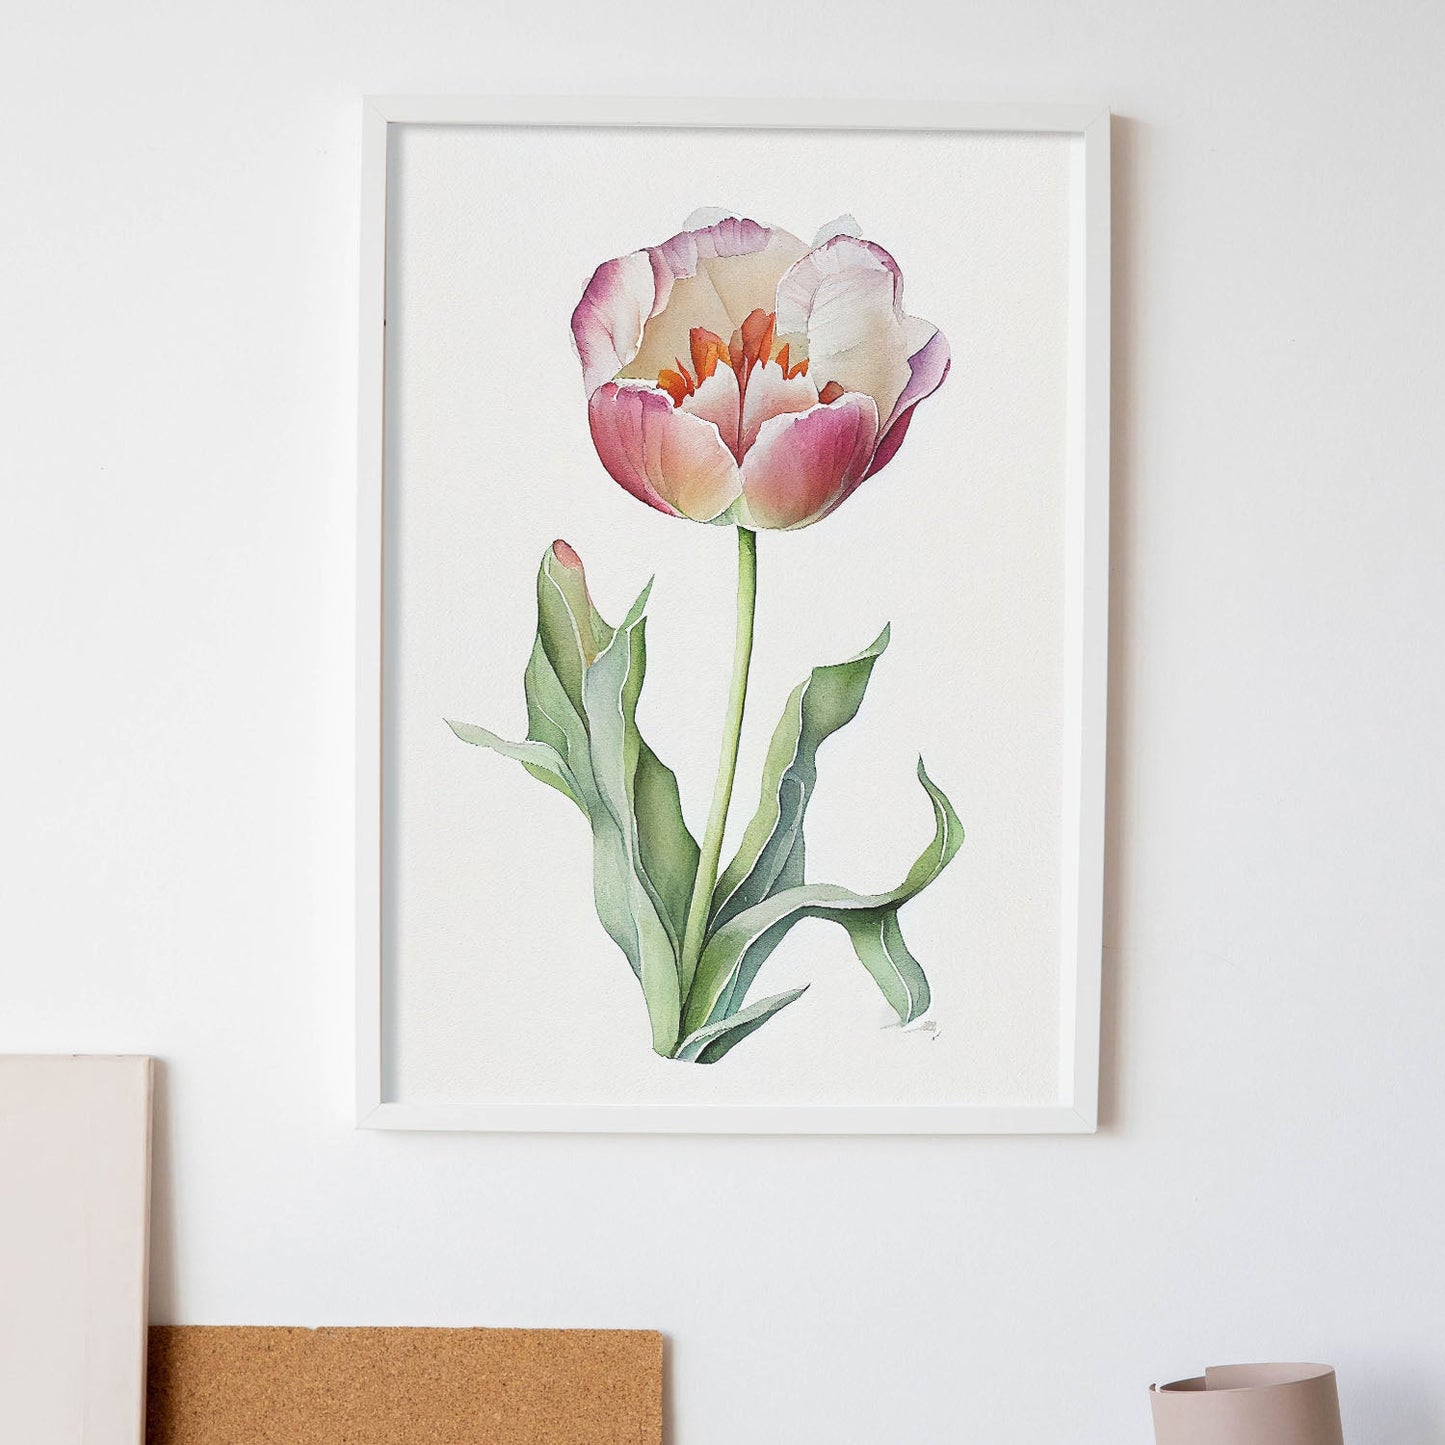 Nacnic watercolor minmal Tulip_3. Aesthetic Wall Art Prints for Bedroom or Living Room Design.-Artwork-Nacnic-A4-Sin Marco-Nacnic Estudio SL